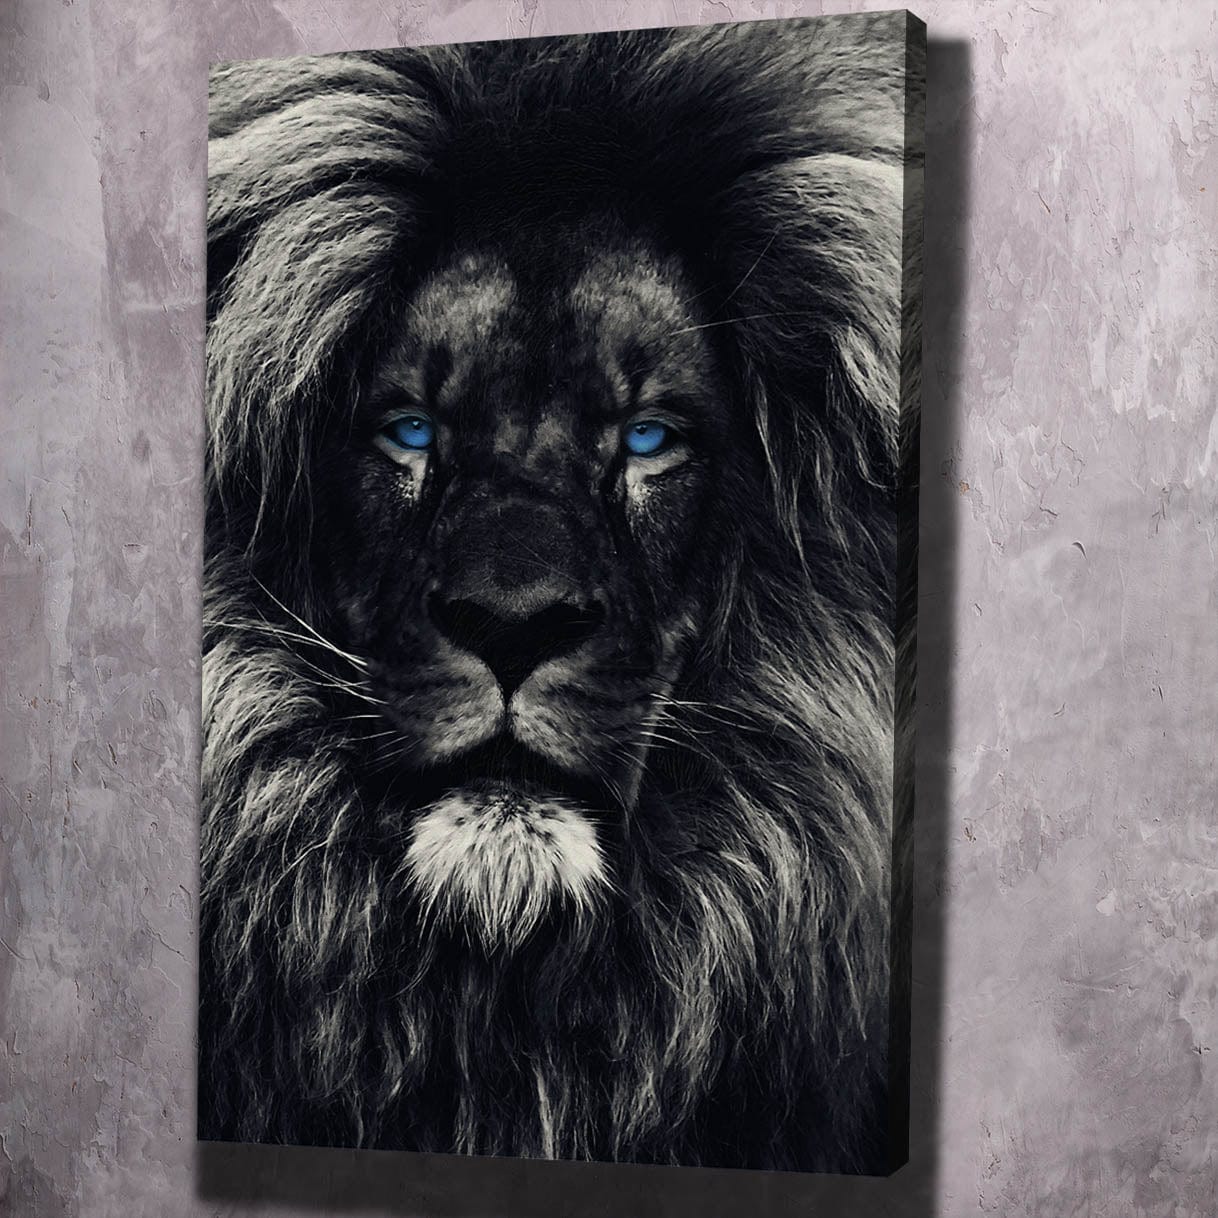 Dark Lion Blue Eyes Wall Art | Inspirational Wall Art Motivational Wall Art Quotes Office Art | ImpaktMaker Exclusive Canvas Art Portrait